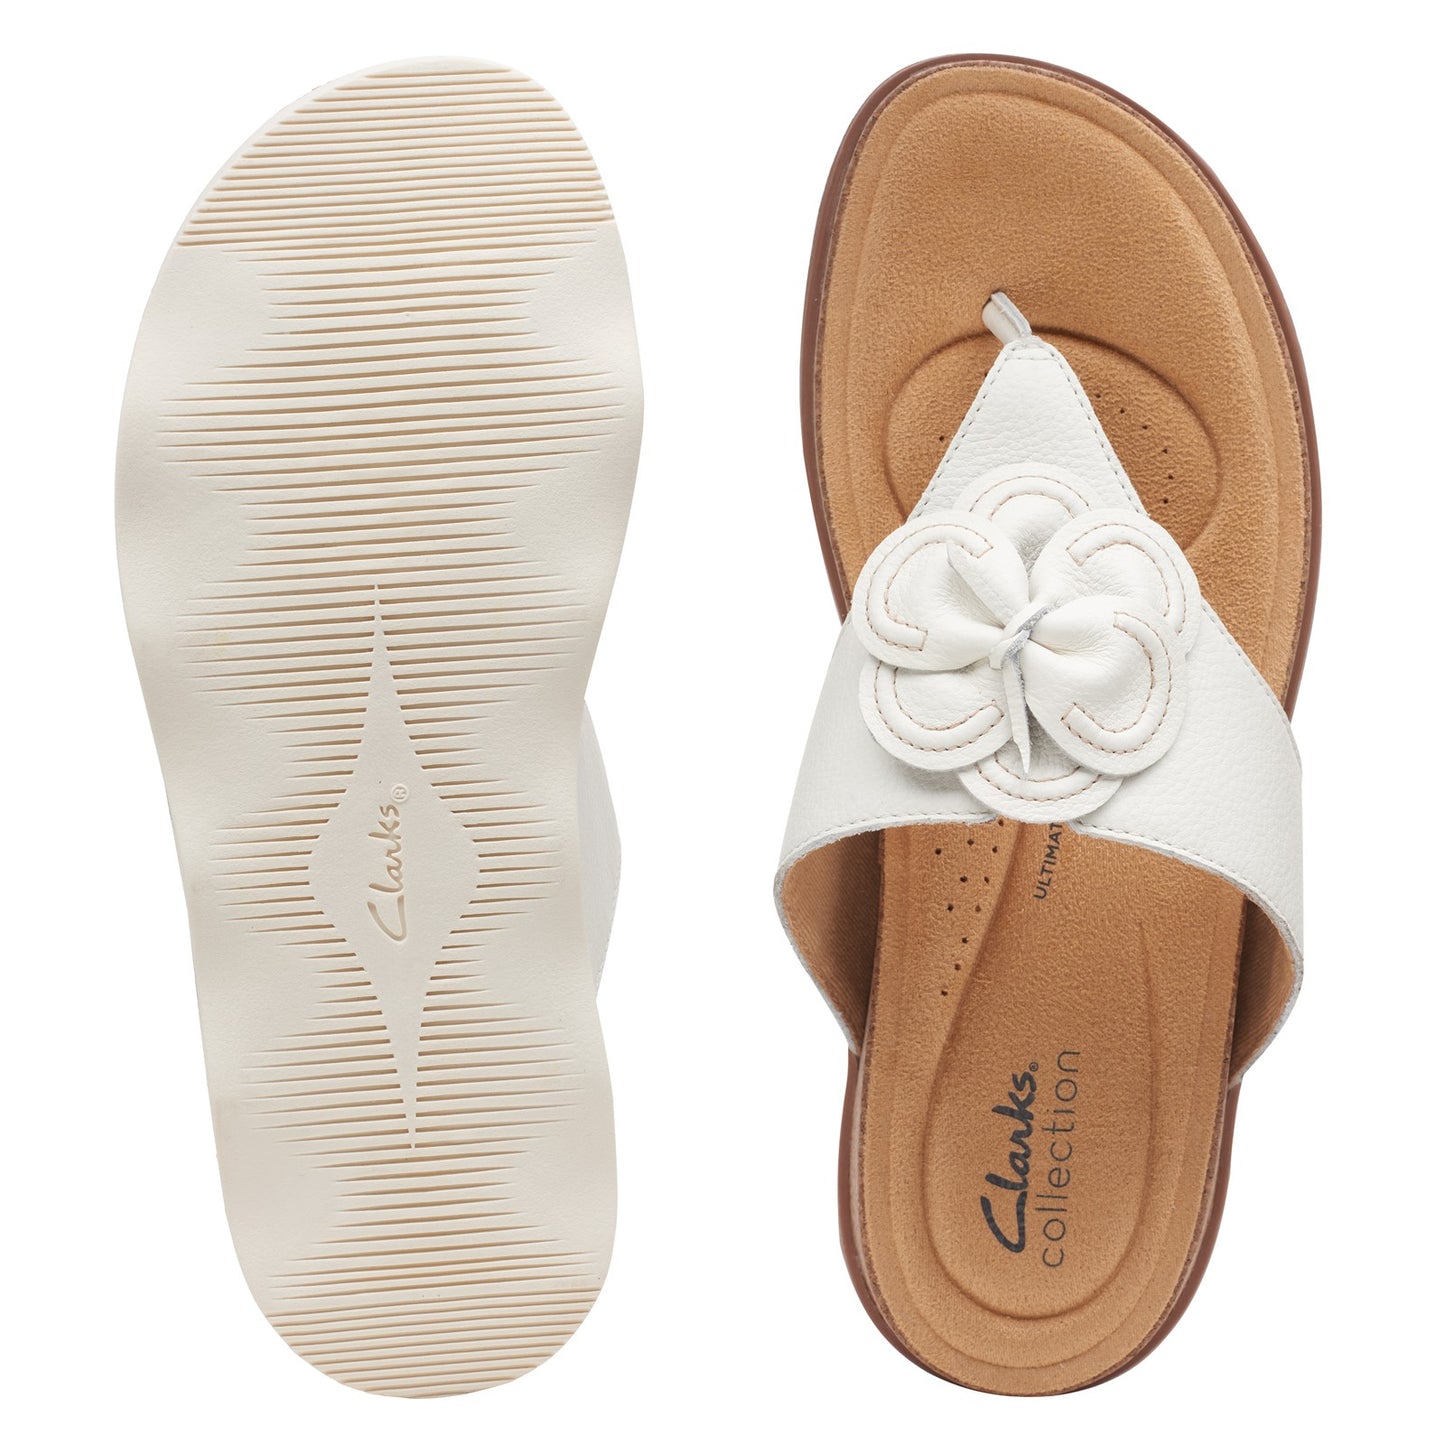 Peltz Shoes  Women's Clarks Brynne Style Sandal WHITE 26165104